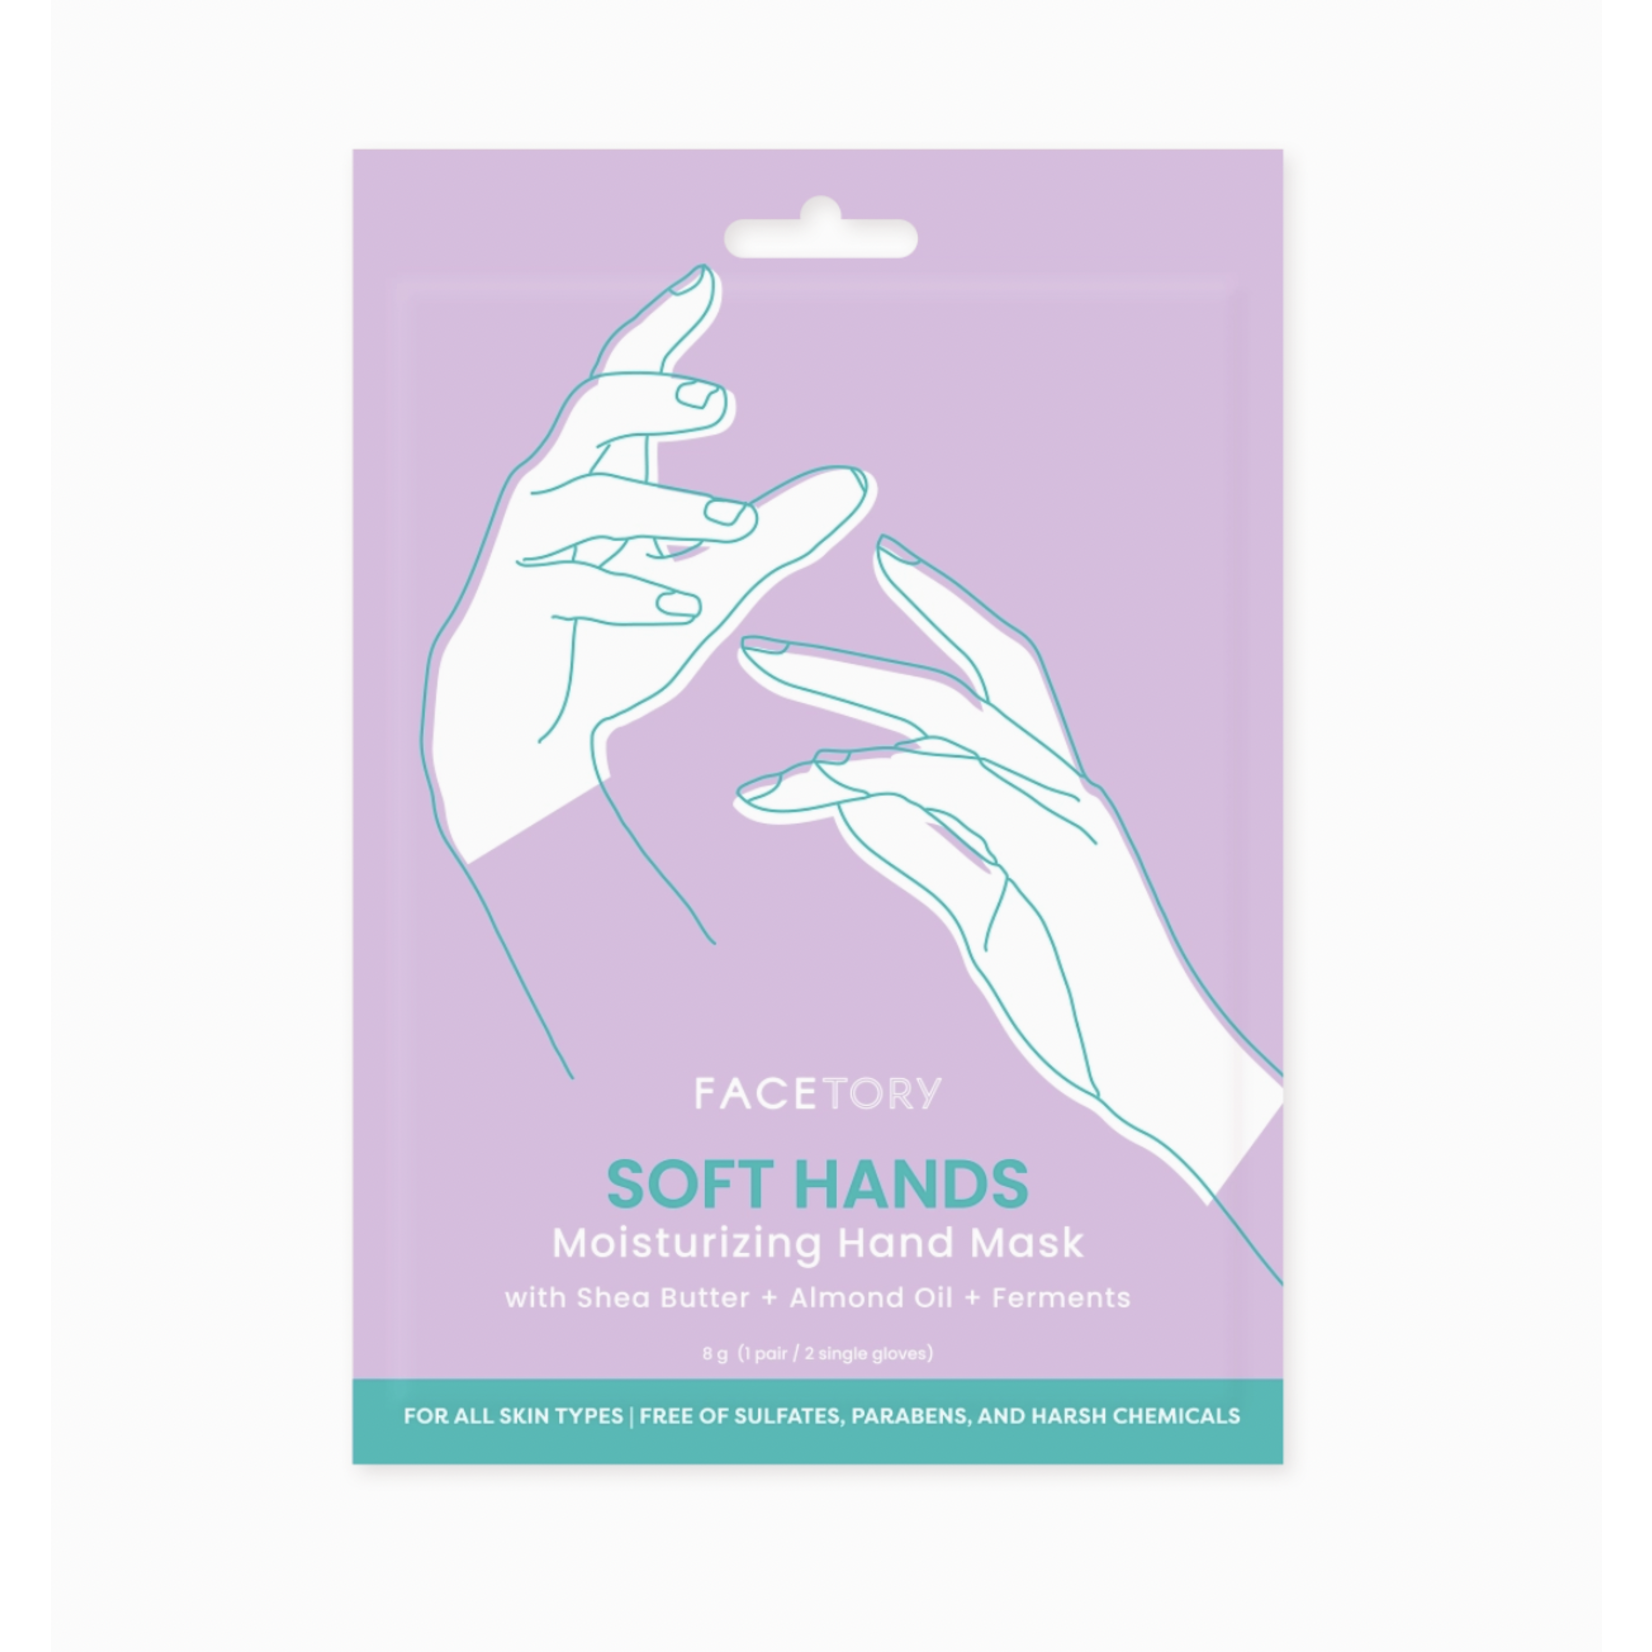 FaceTory Soft Hands Moisturizing Hand Mask